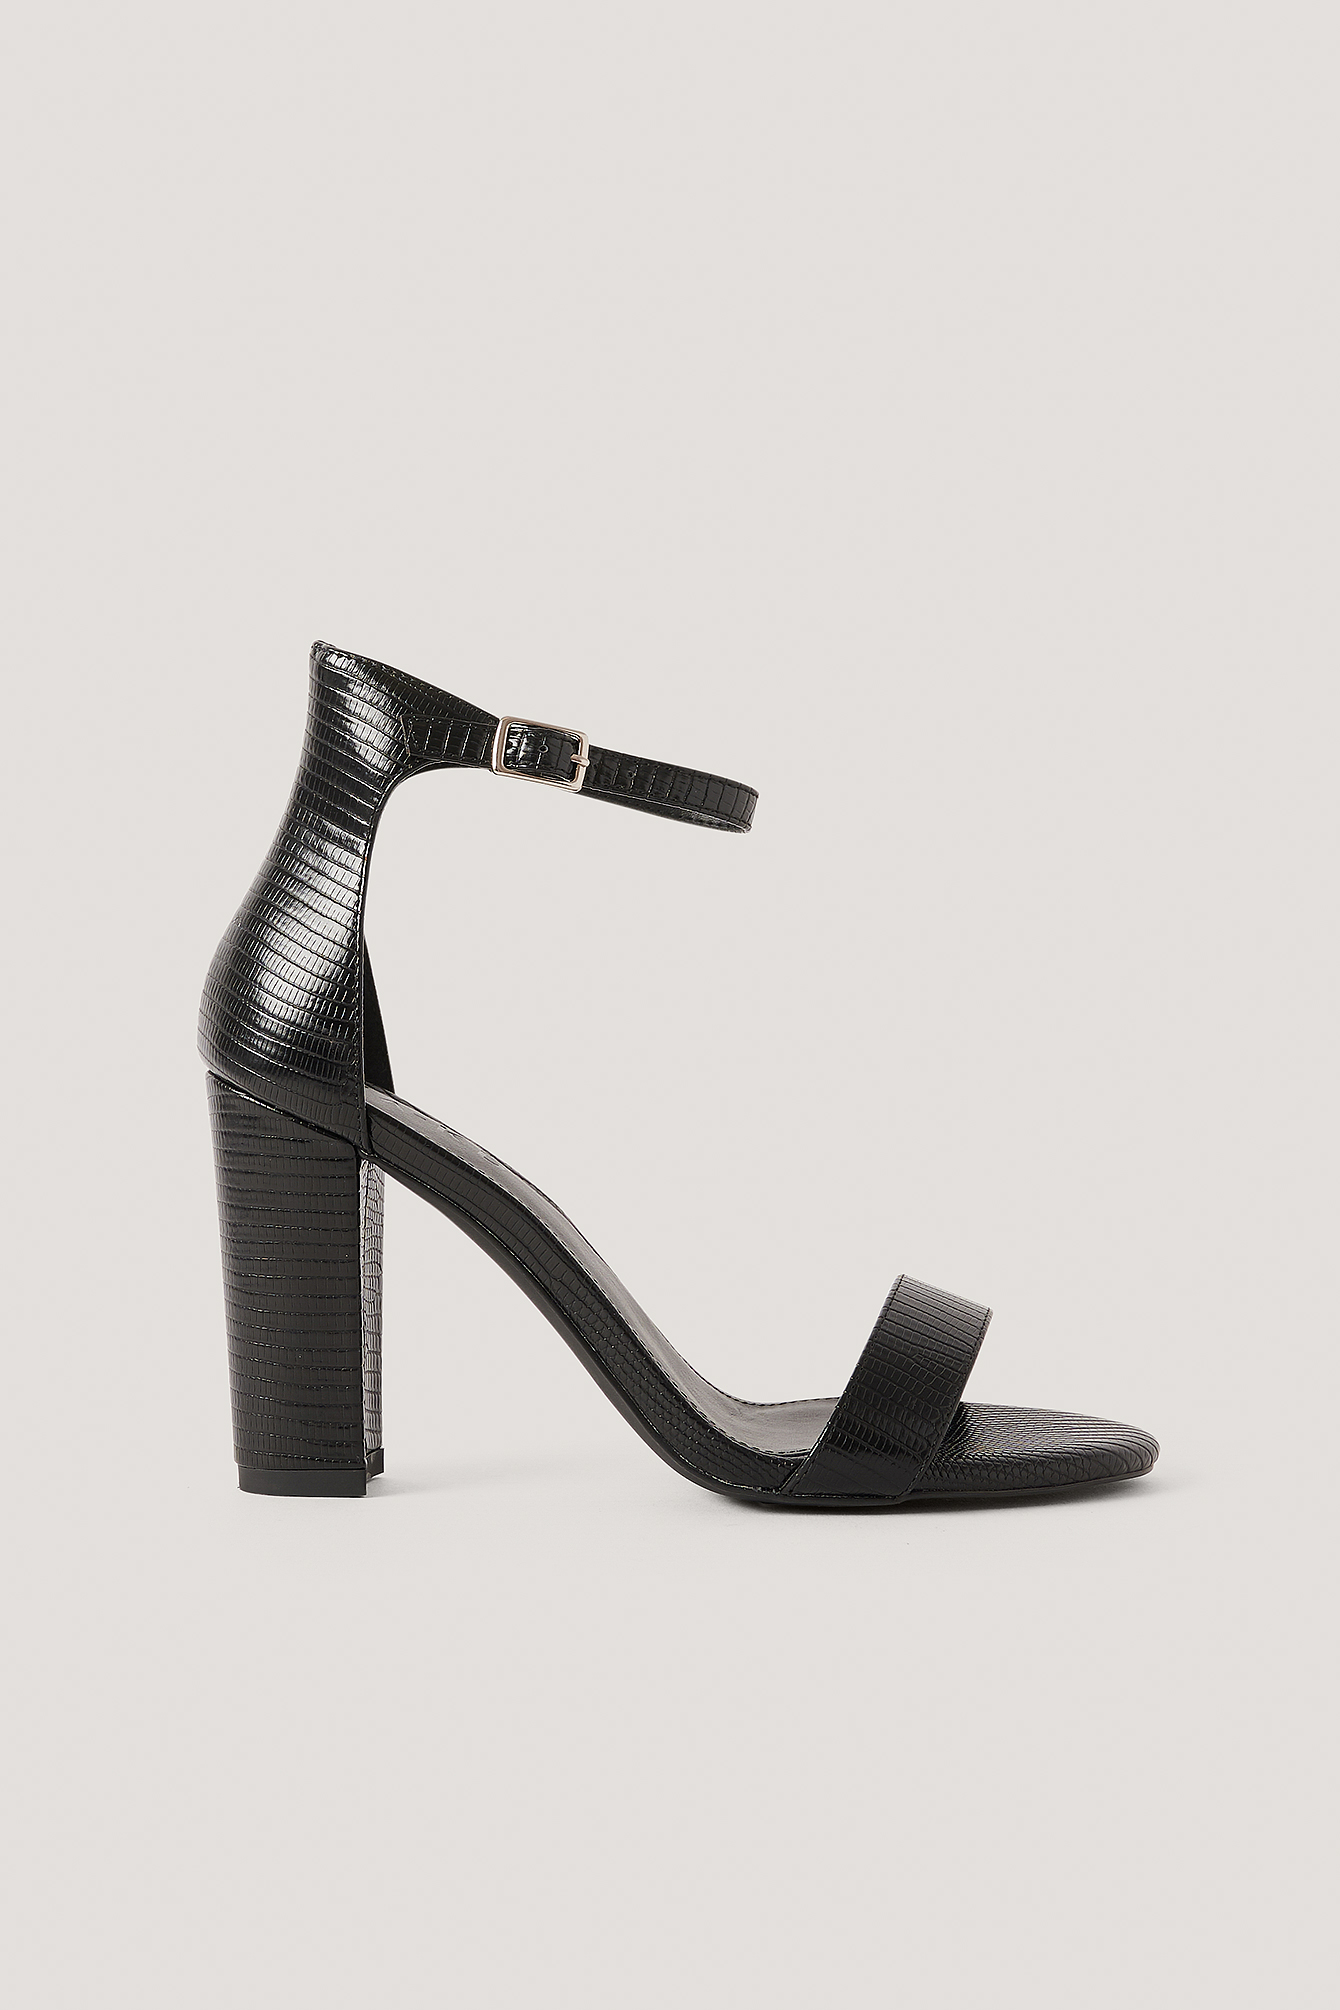 basic black heel